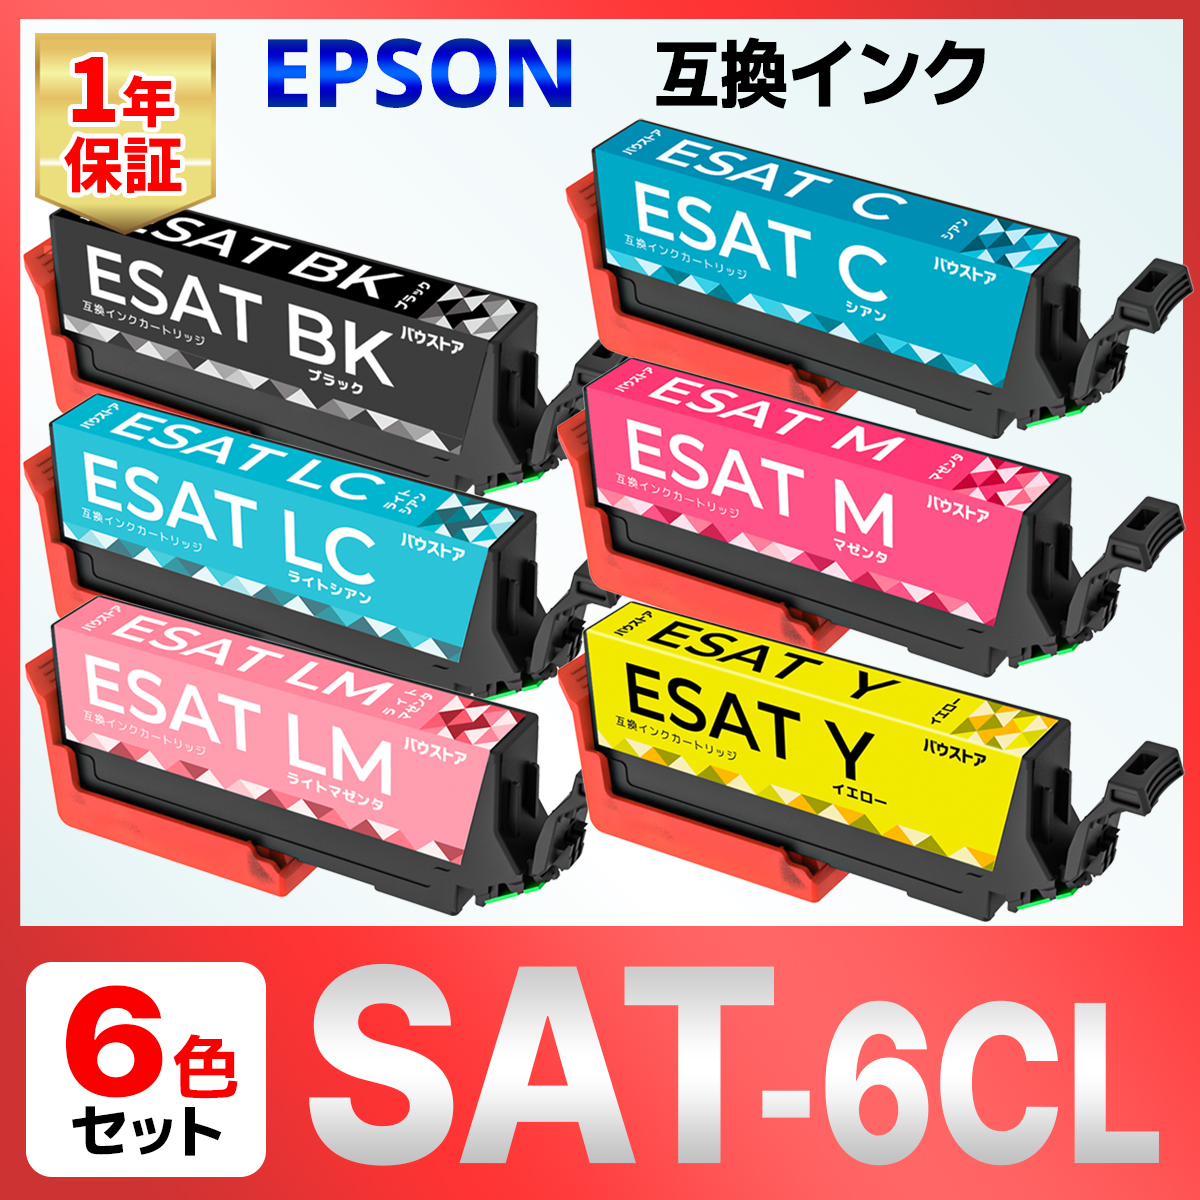 SAT-6CL SAT サツマイモ 互換 インク ６個 EPSON エプソン EP-712A EP-713A EP-714A EP-715A EP-716A EP-812A EP-813A EP-814A EP-815A EP-816A